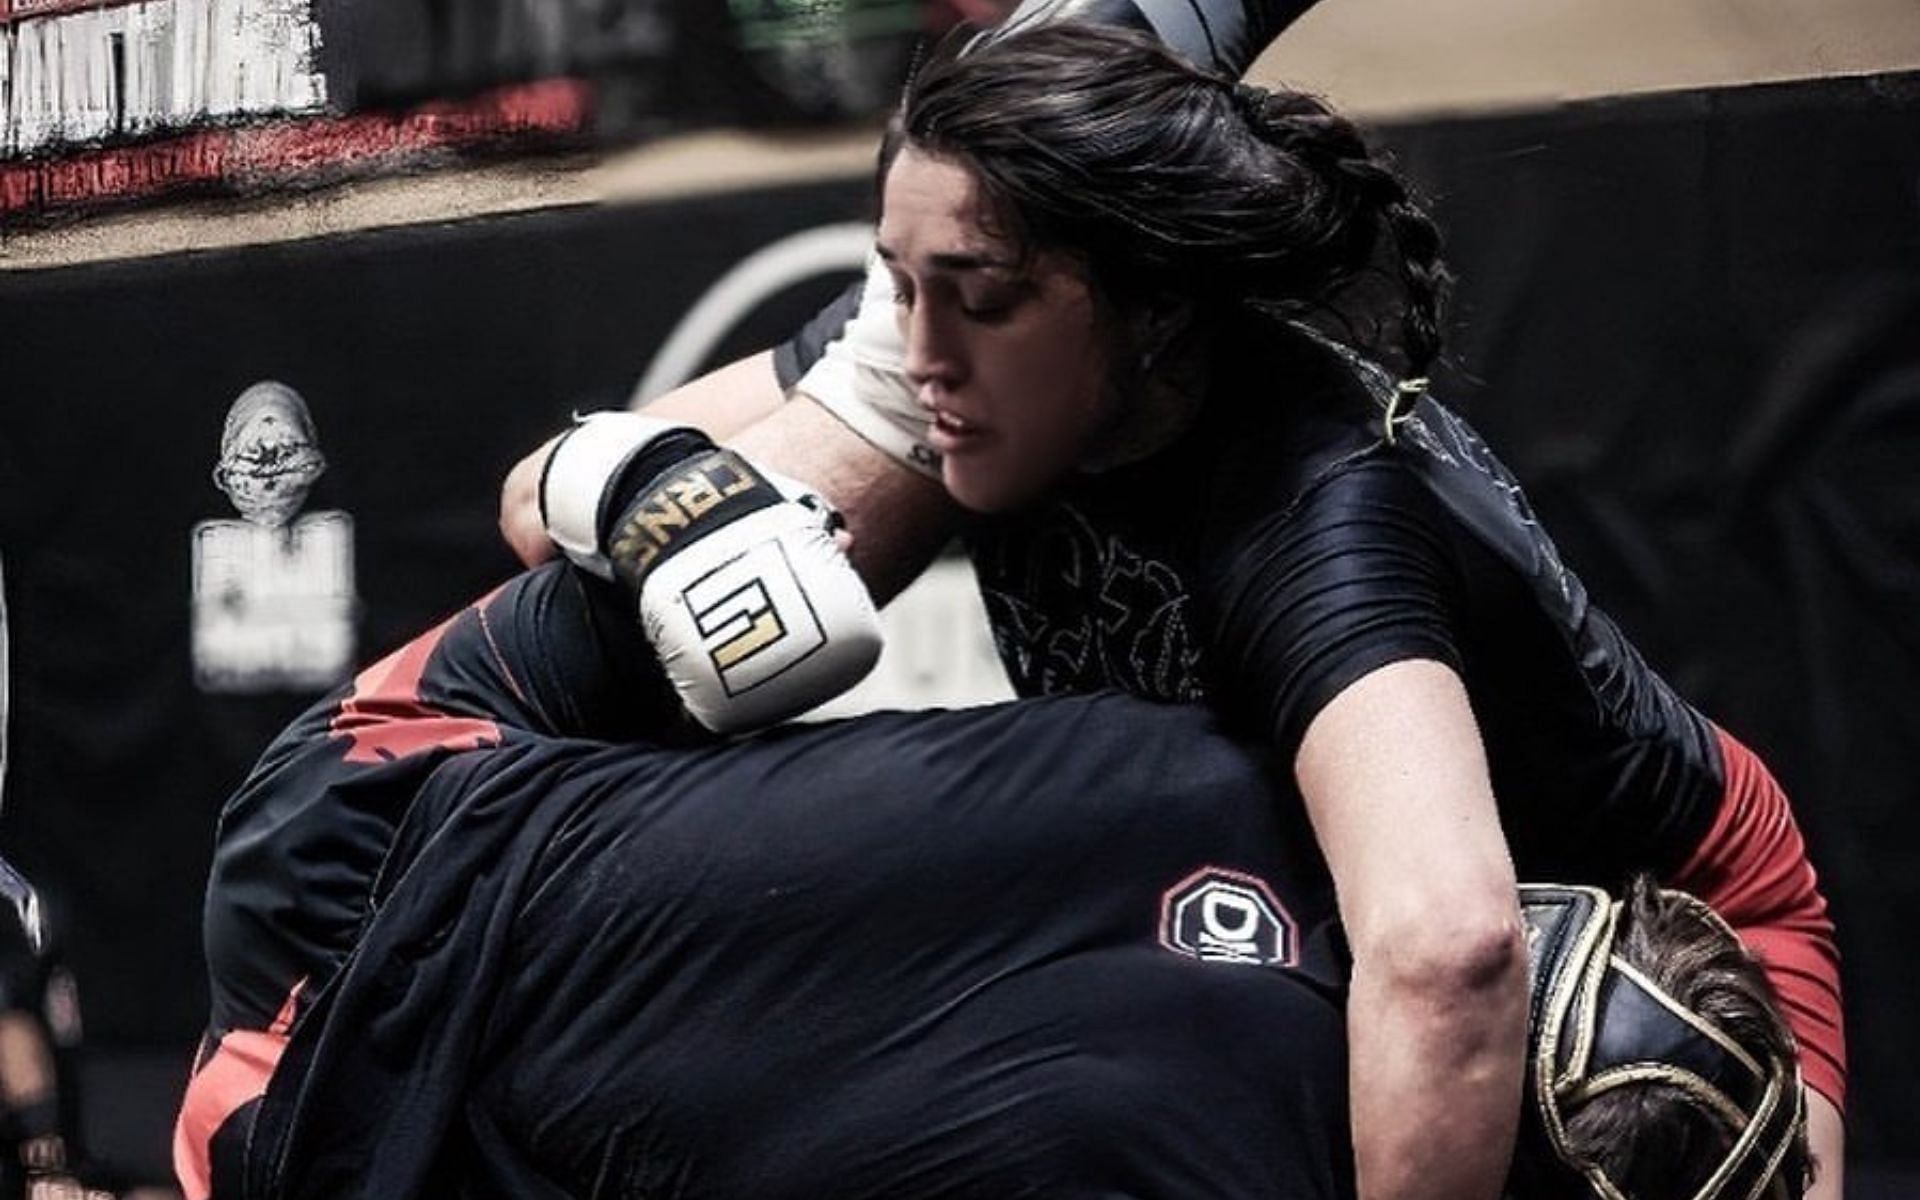 UFC strawweight fighter Tatiana Suarez